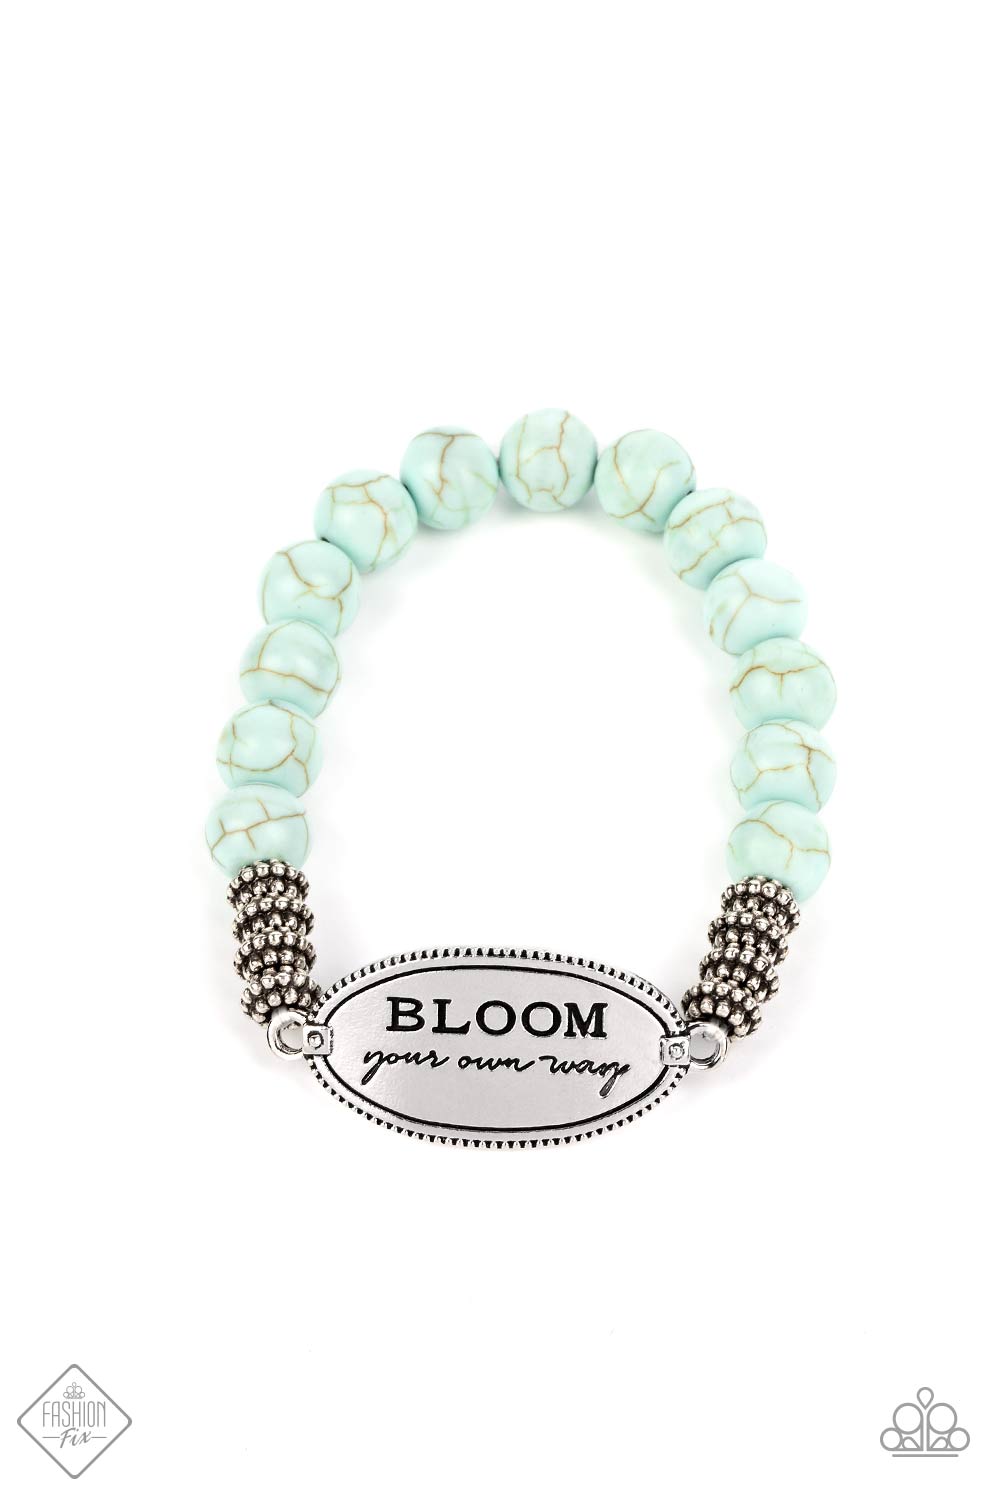 Bedouin Bloom Blue Stone Inspirational Bracelet - Paparazzi Accessories- lightbox - CarasShop.com - $5 Jewelry by Cara Jewels